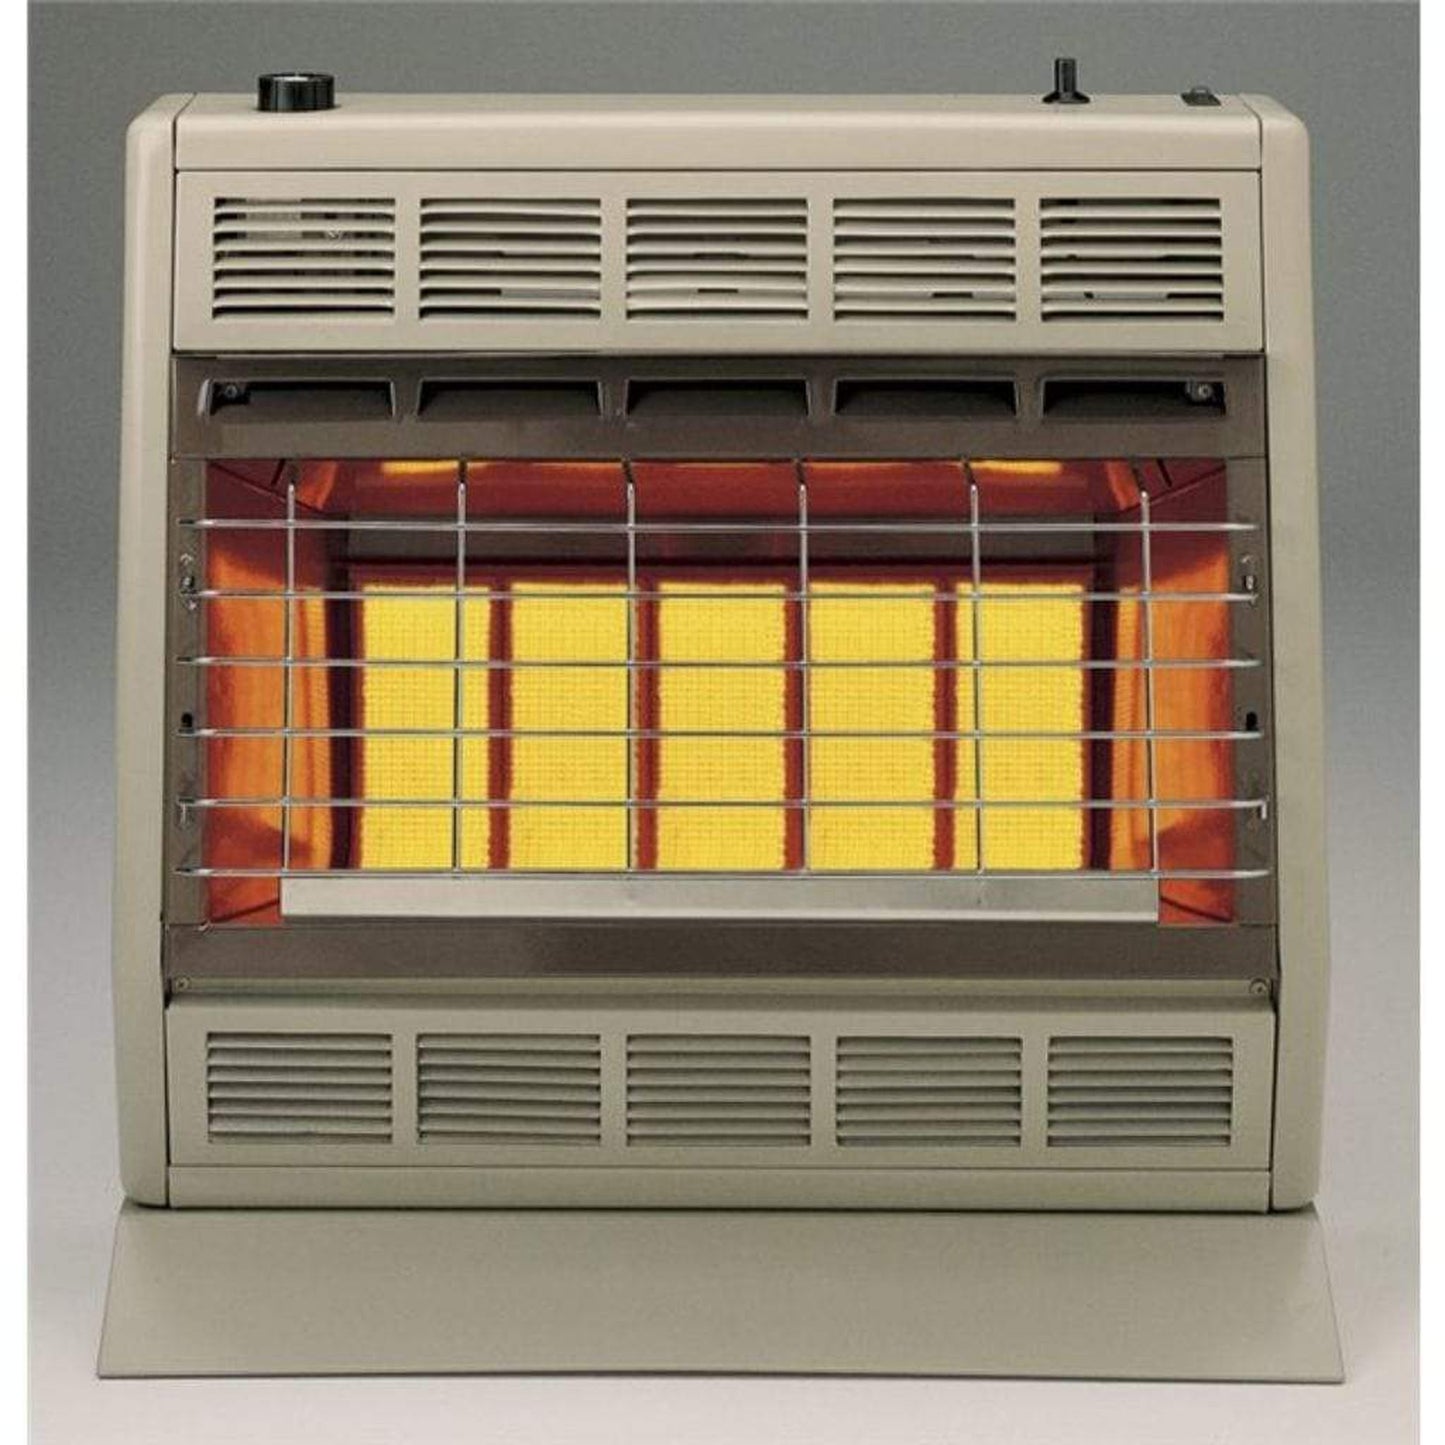 Empire 24" Hydraulic Thermostat, White 30,000 Btu, Vent-Free Infrared Heater